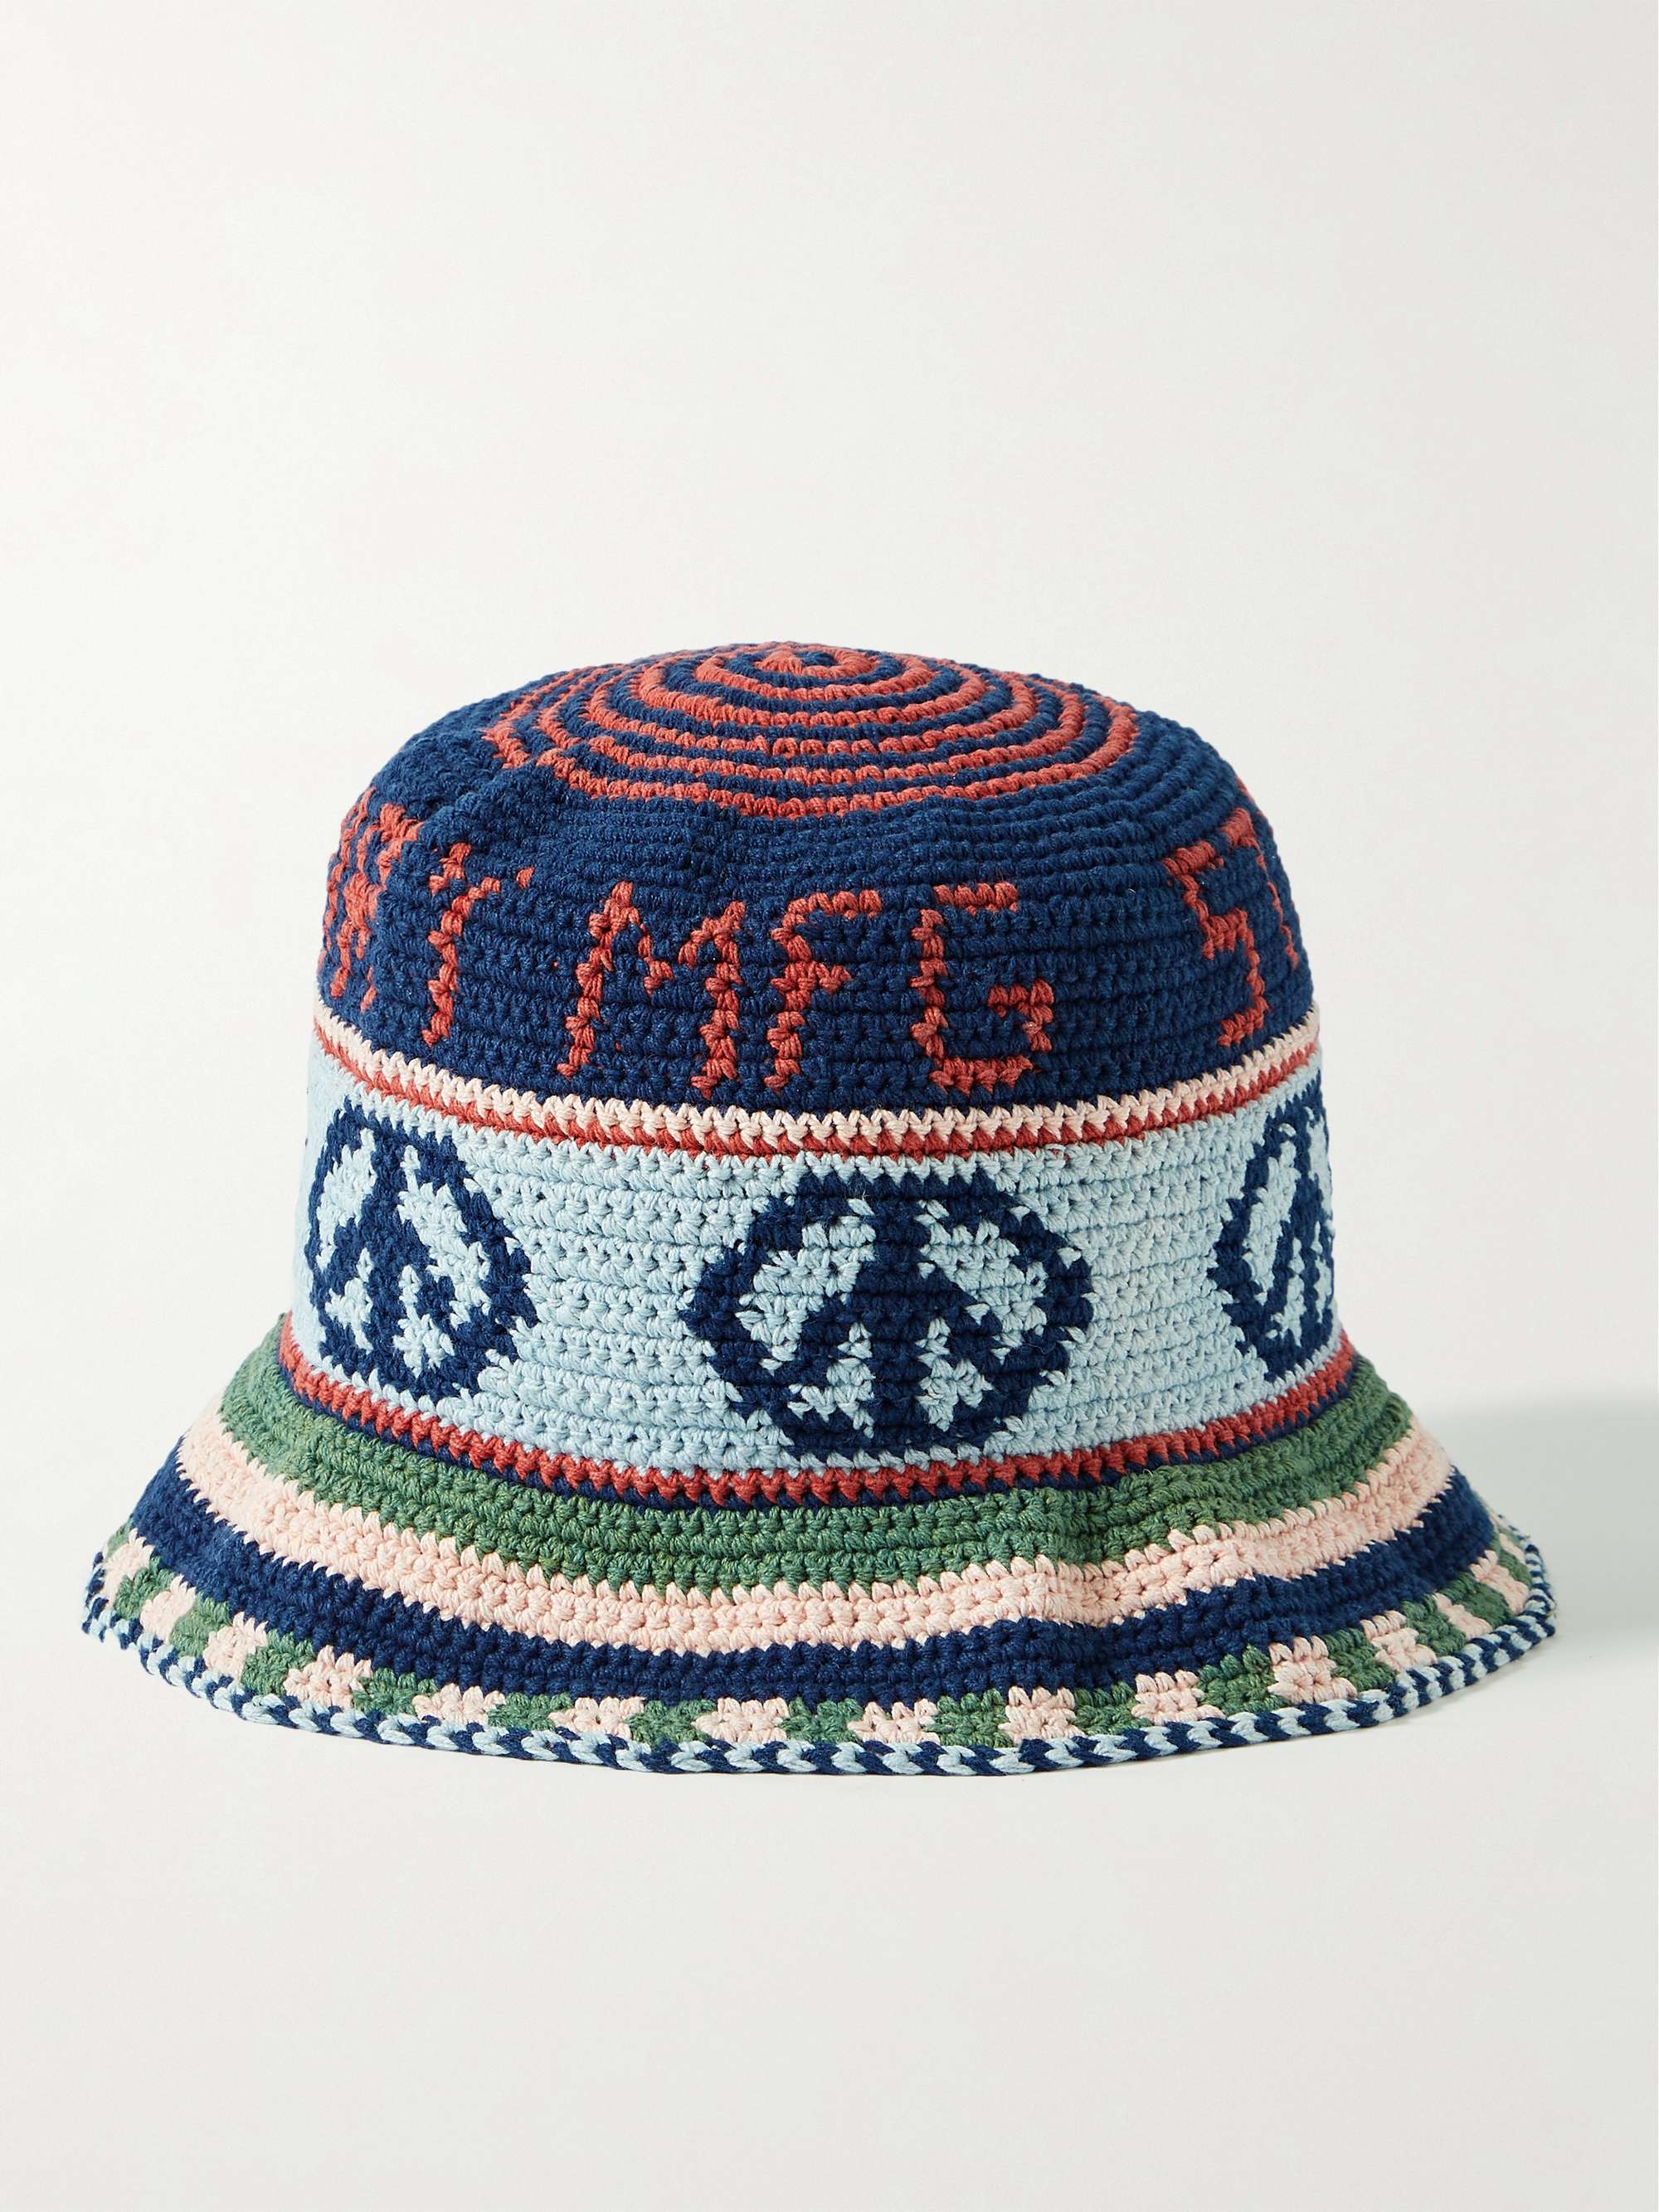 STORY MFG. Brew Crocheted Organic Cotton Hat